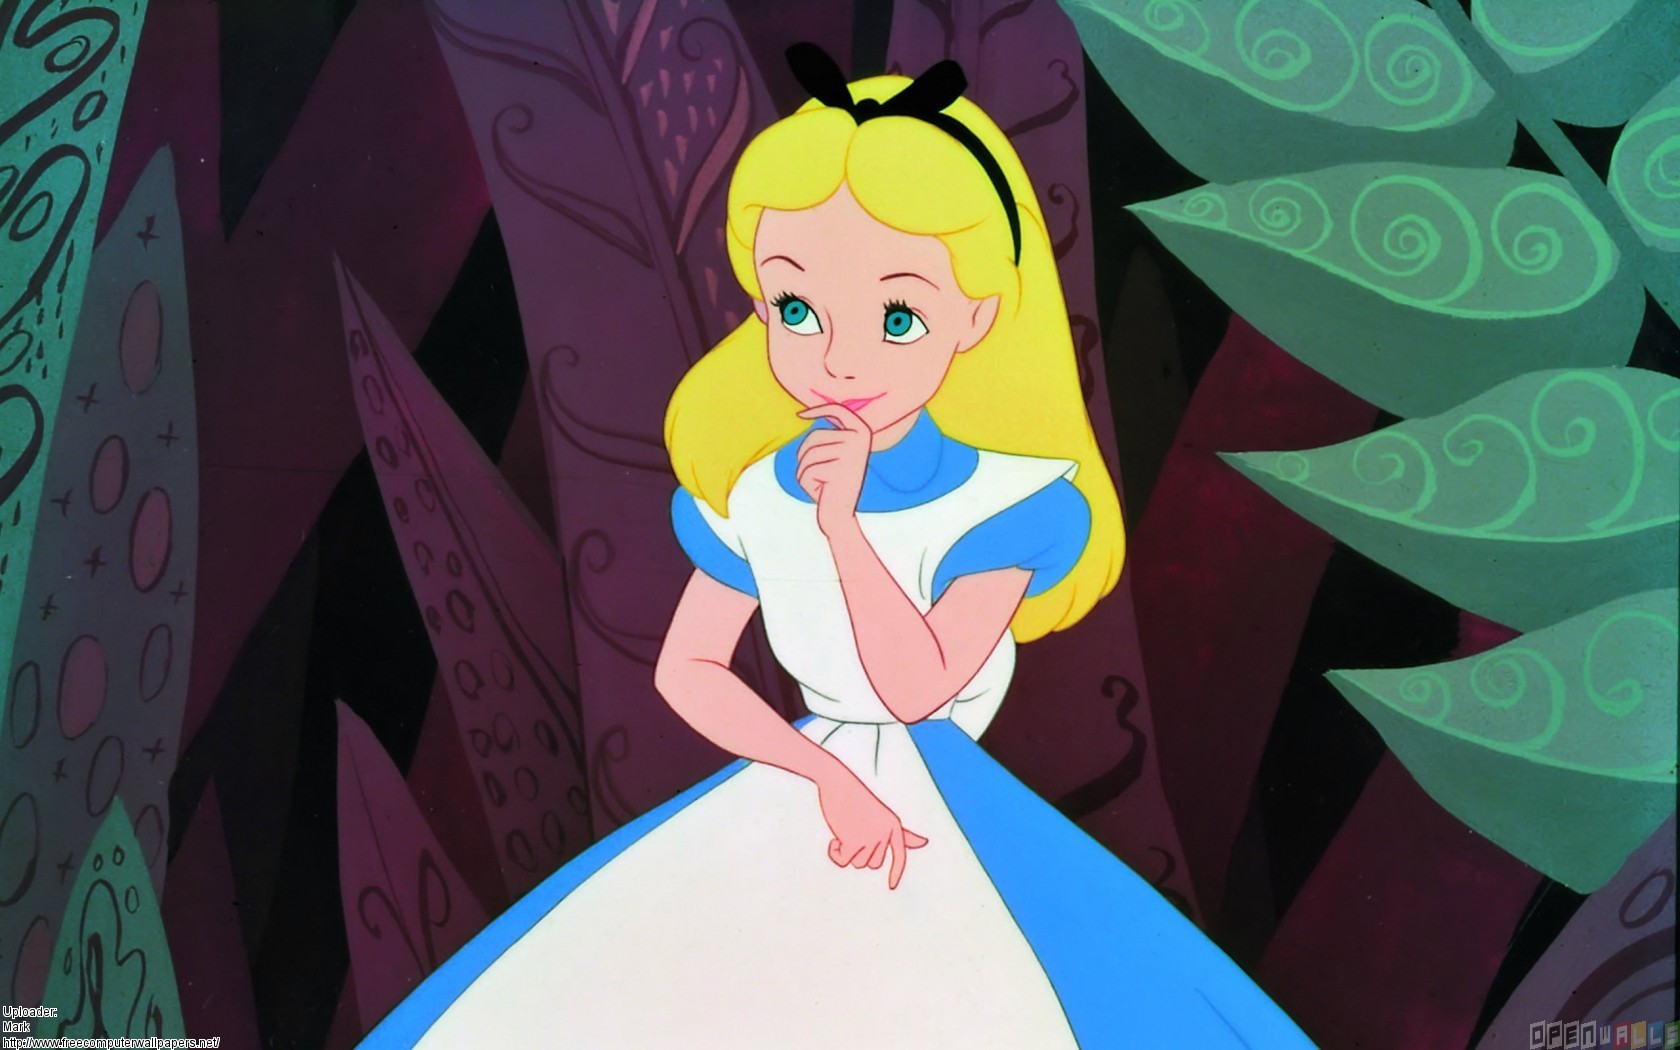 Disney Movie Alice In Wonderland Wallpaper Open Walls